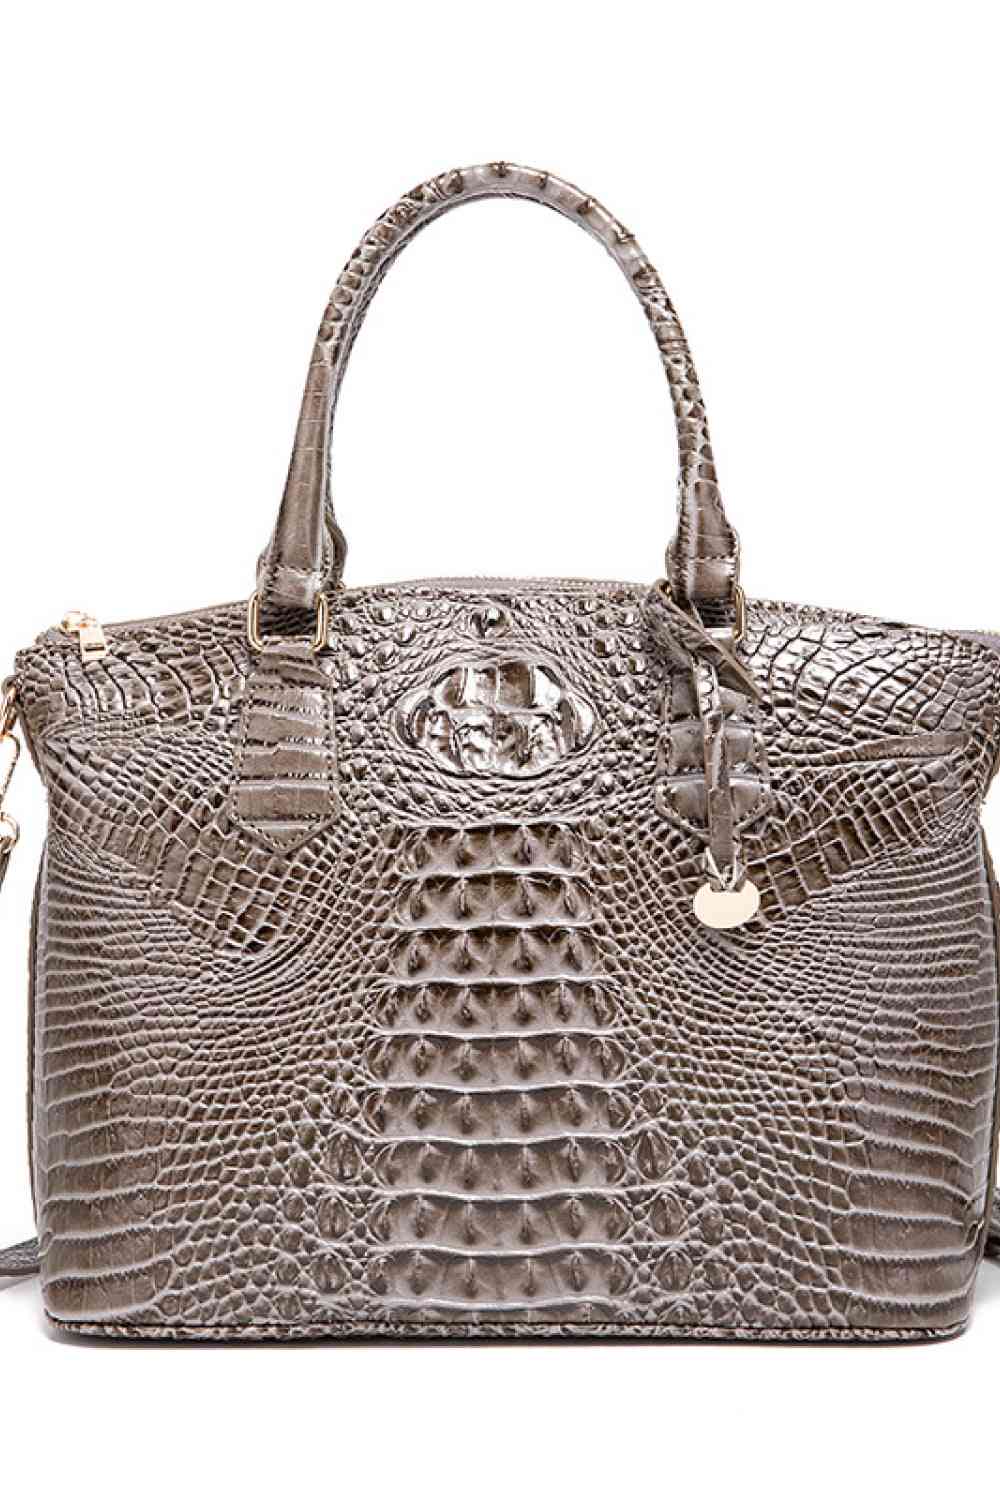 PU Leather 11 inch Handbag